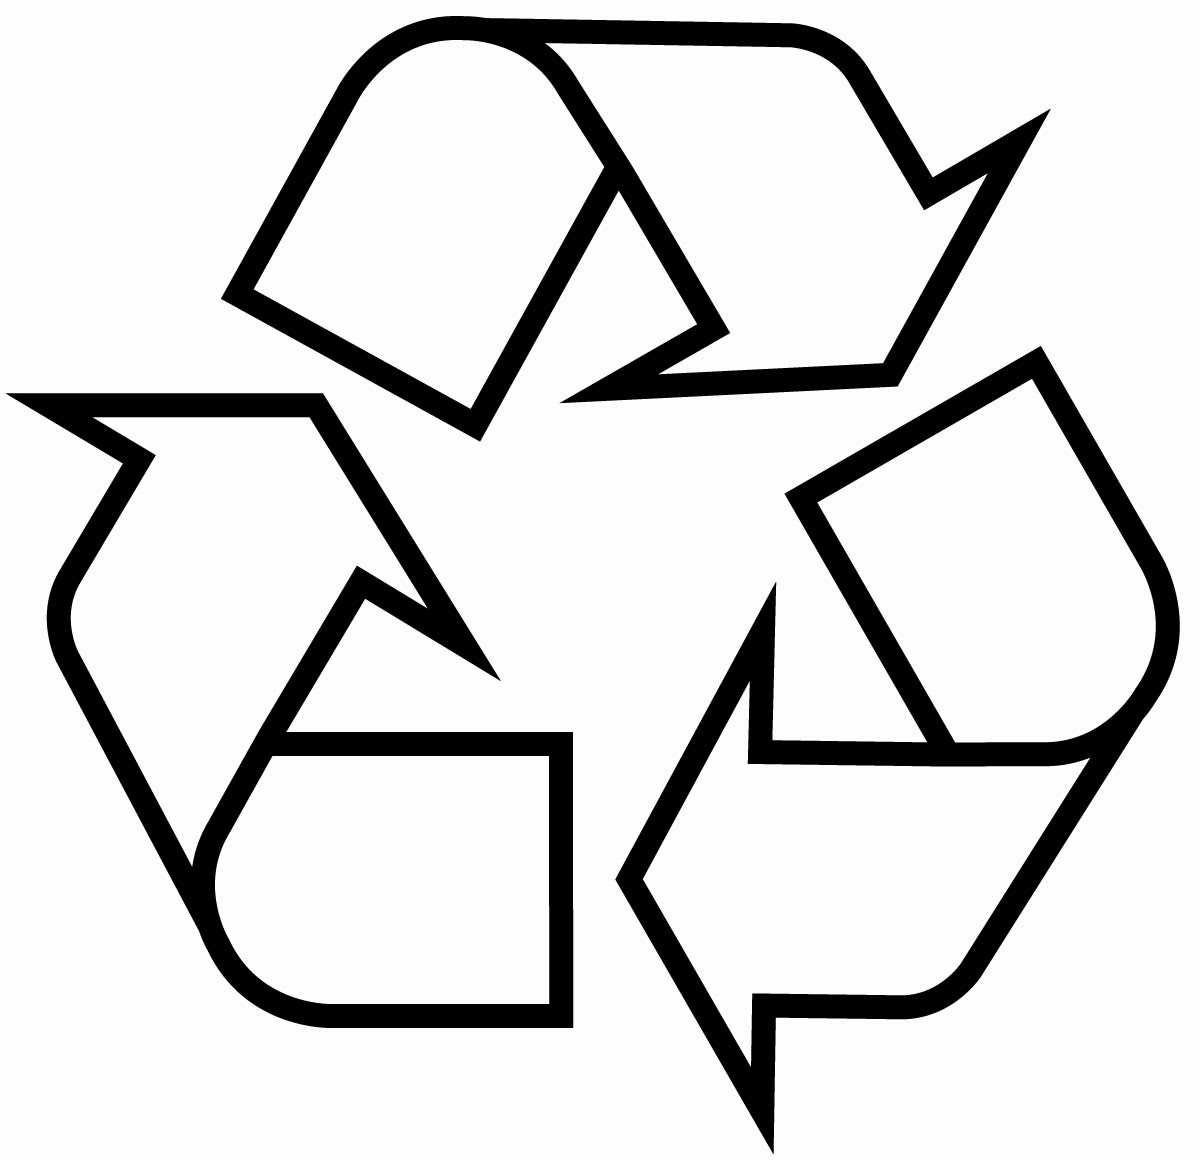 Sadi&#39;s Art Blog: The Recycling Symbol